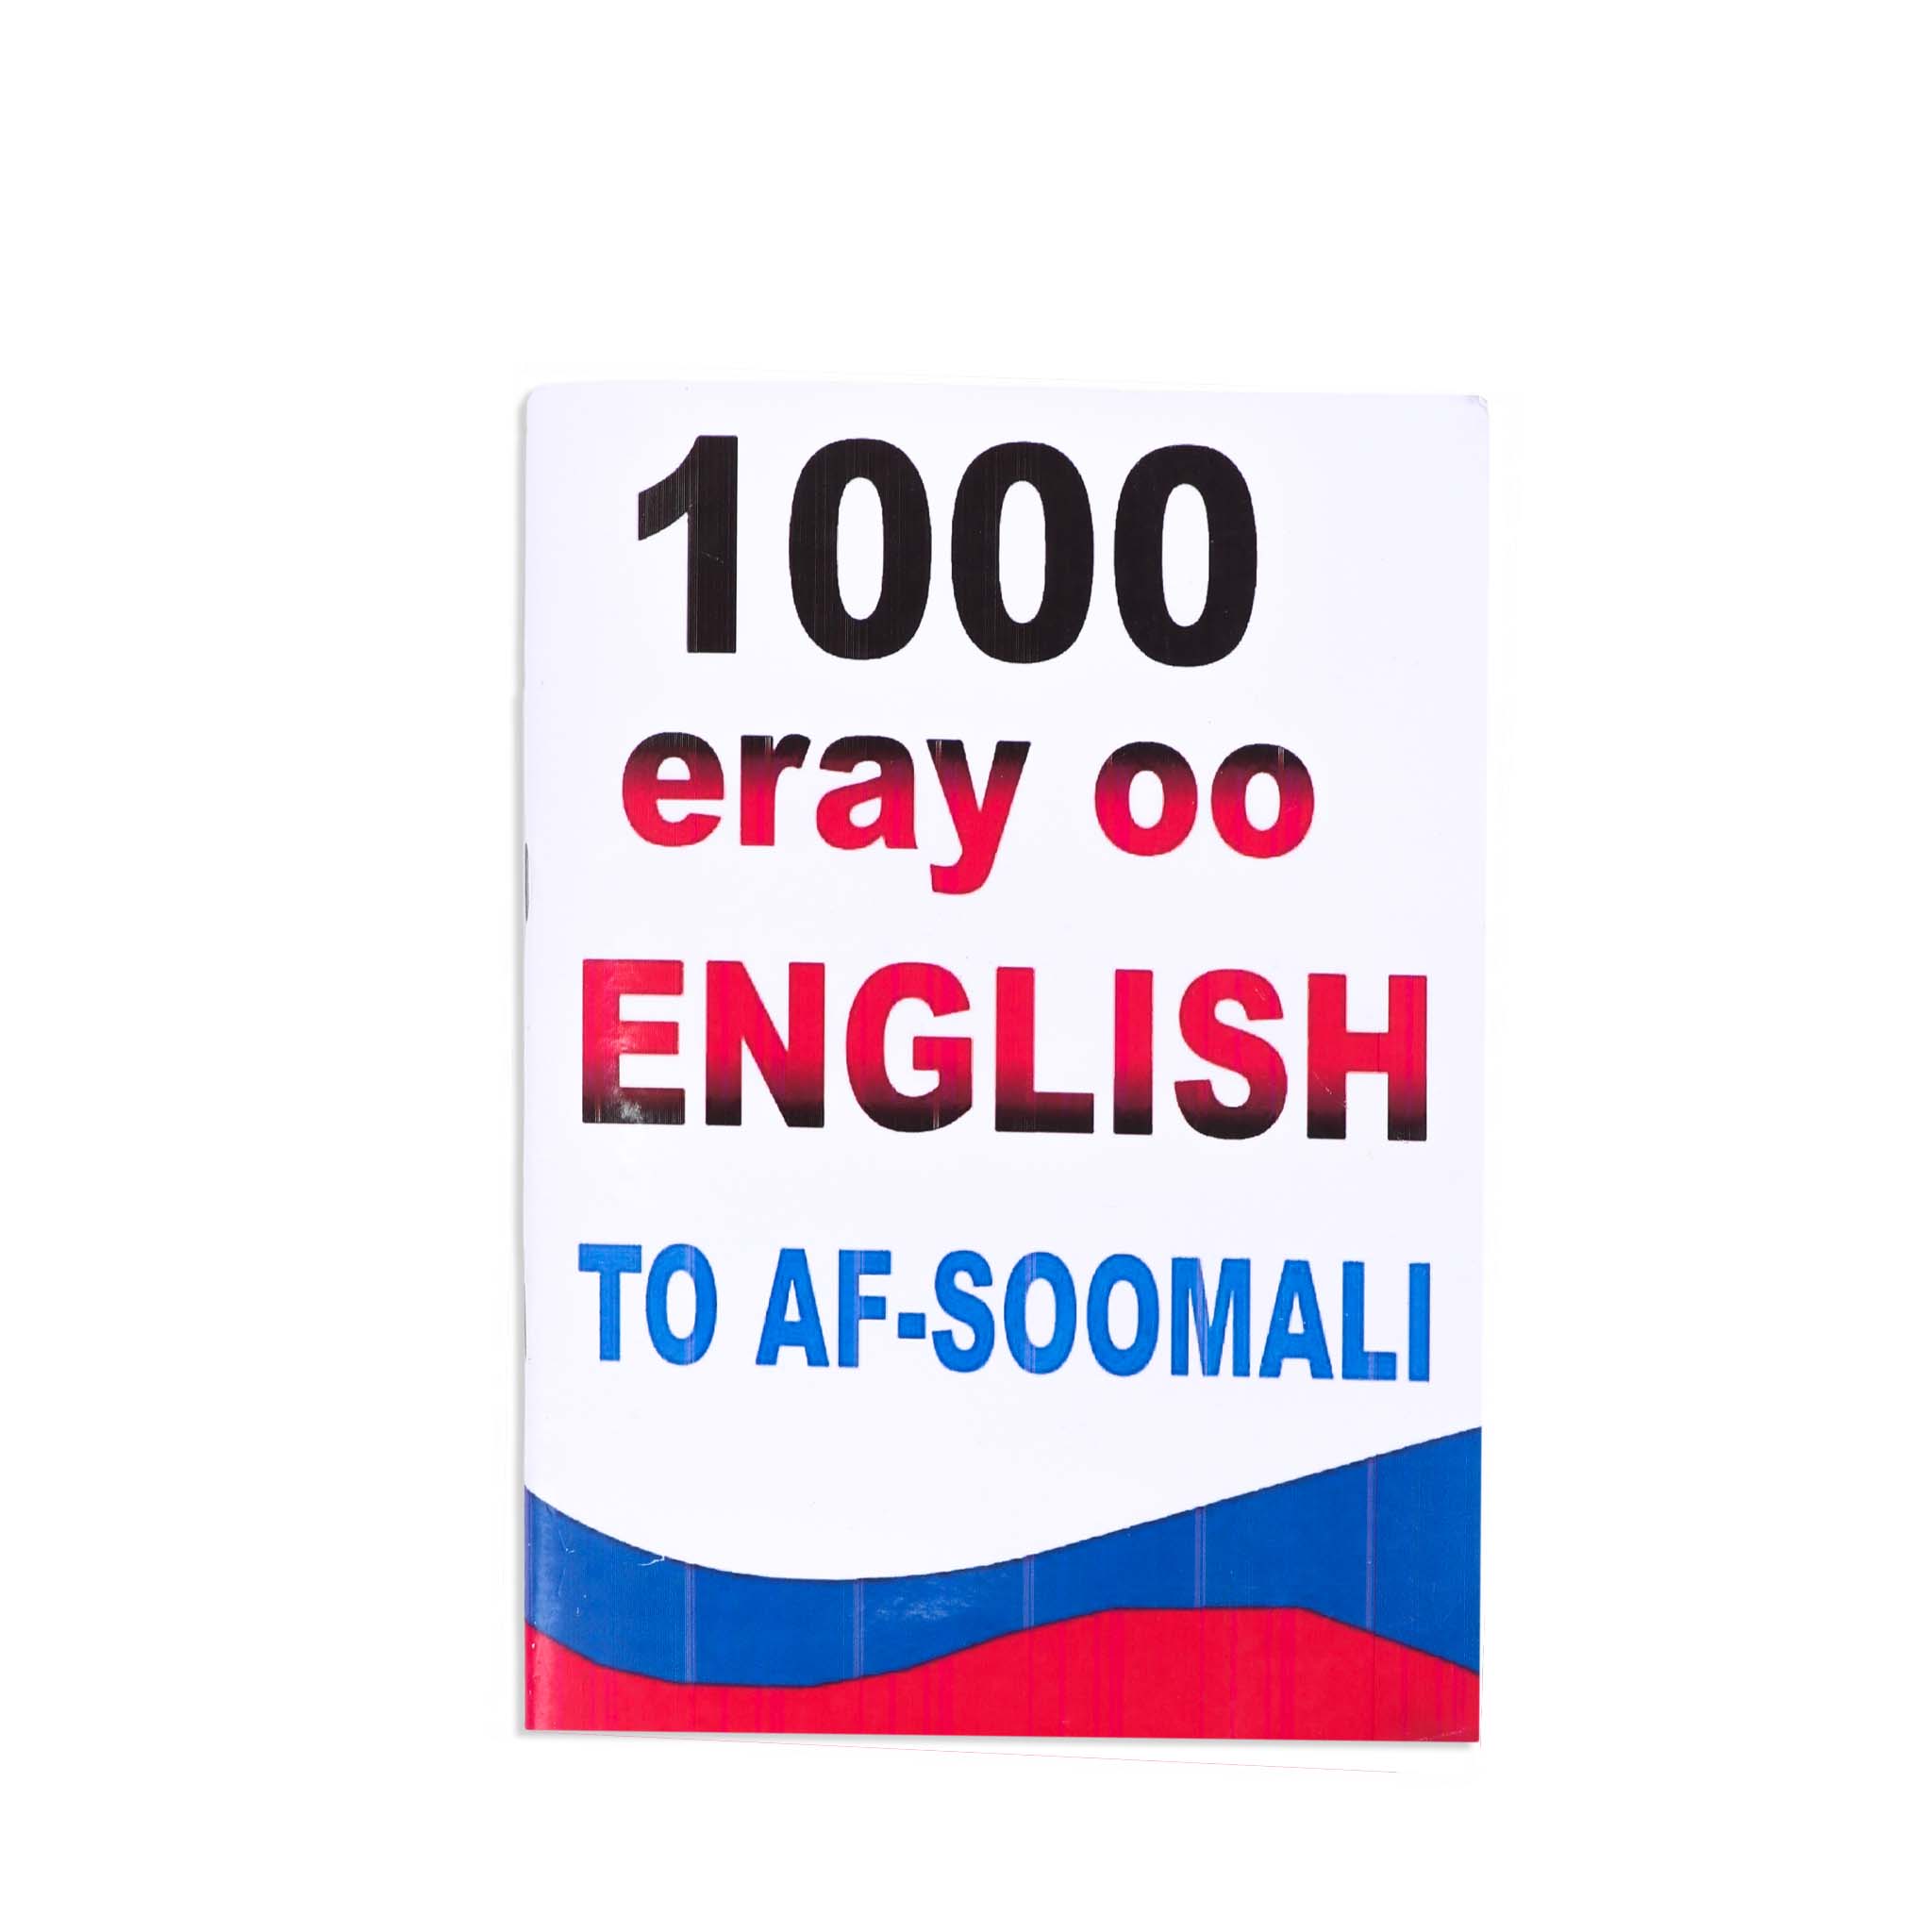 1000 Eray oo English To Af-Somali